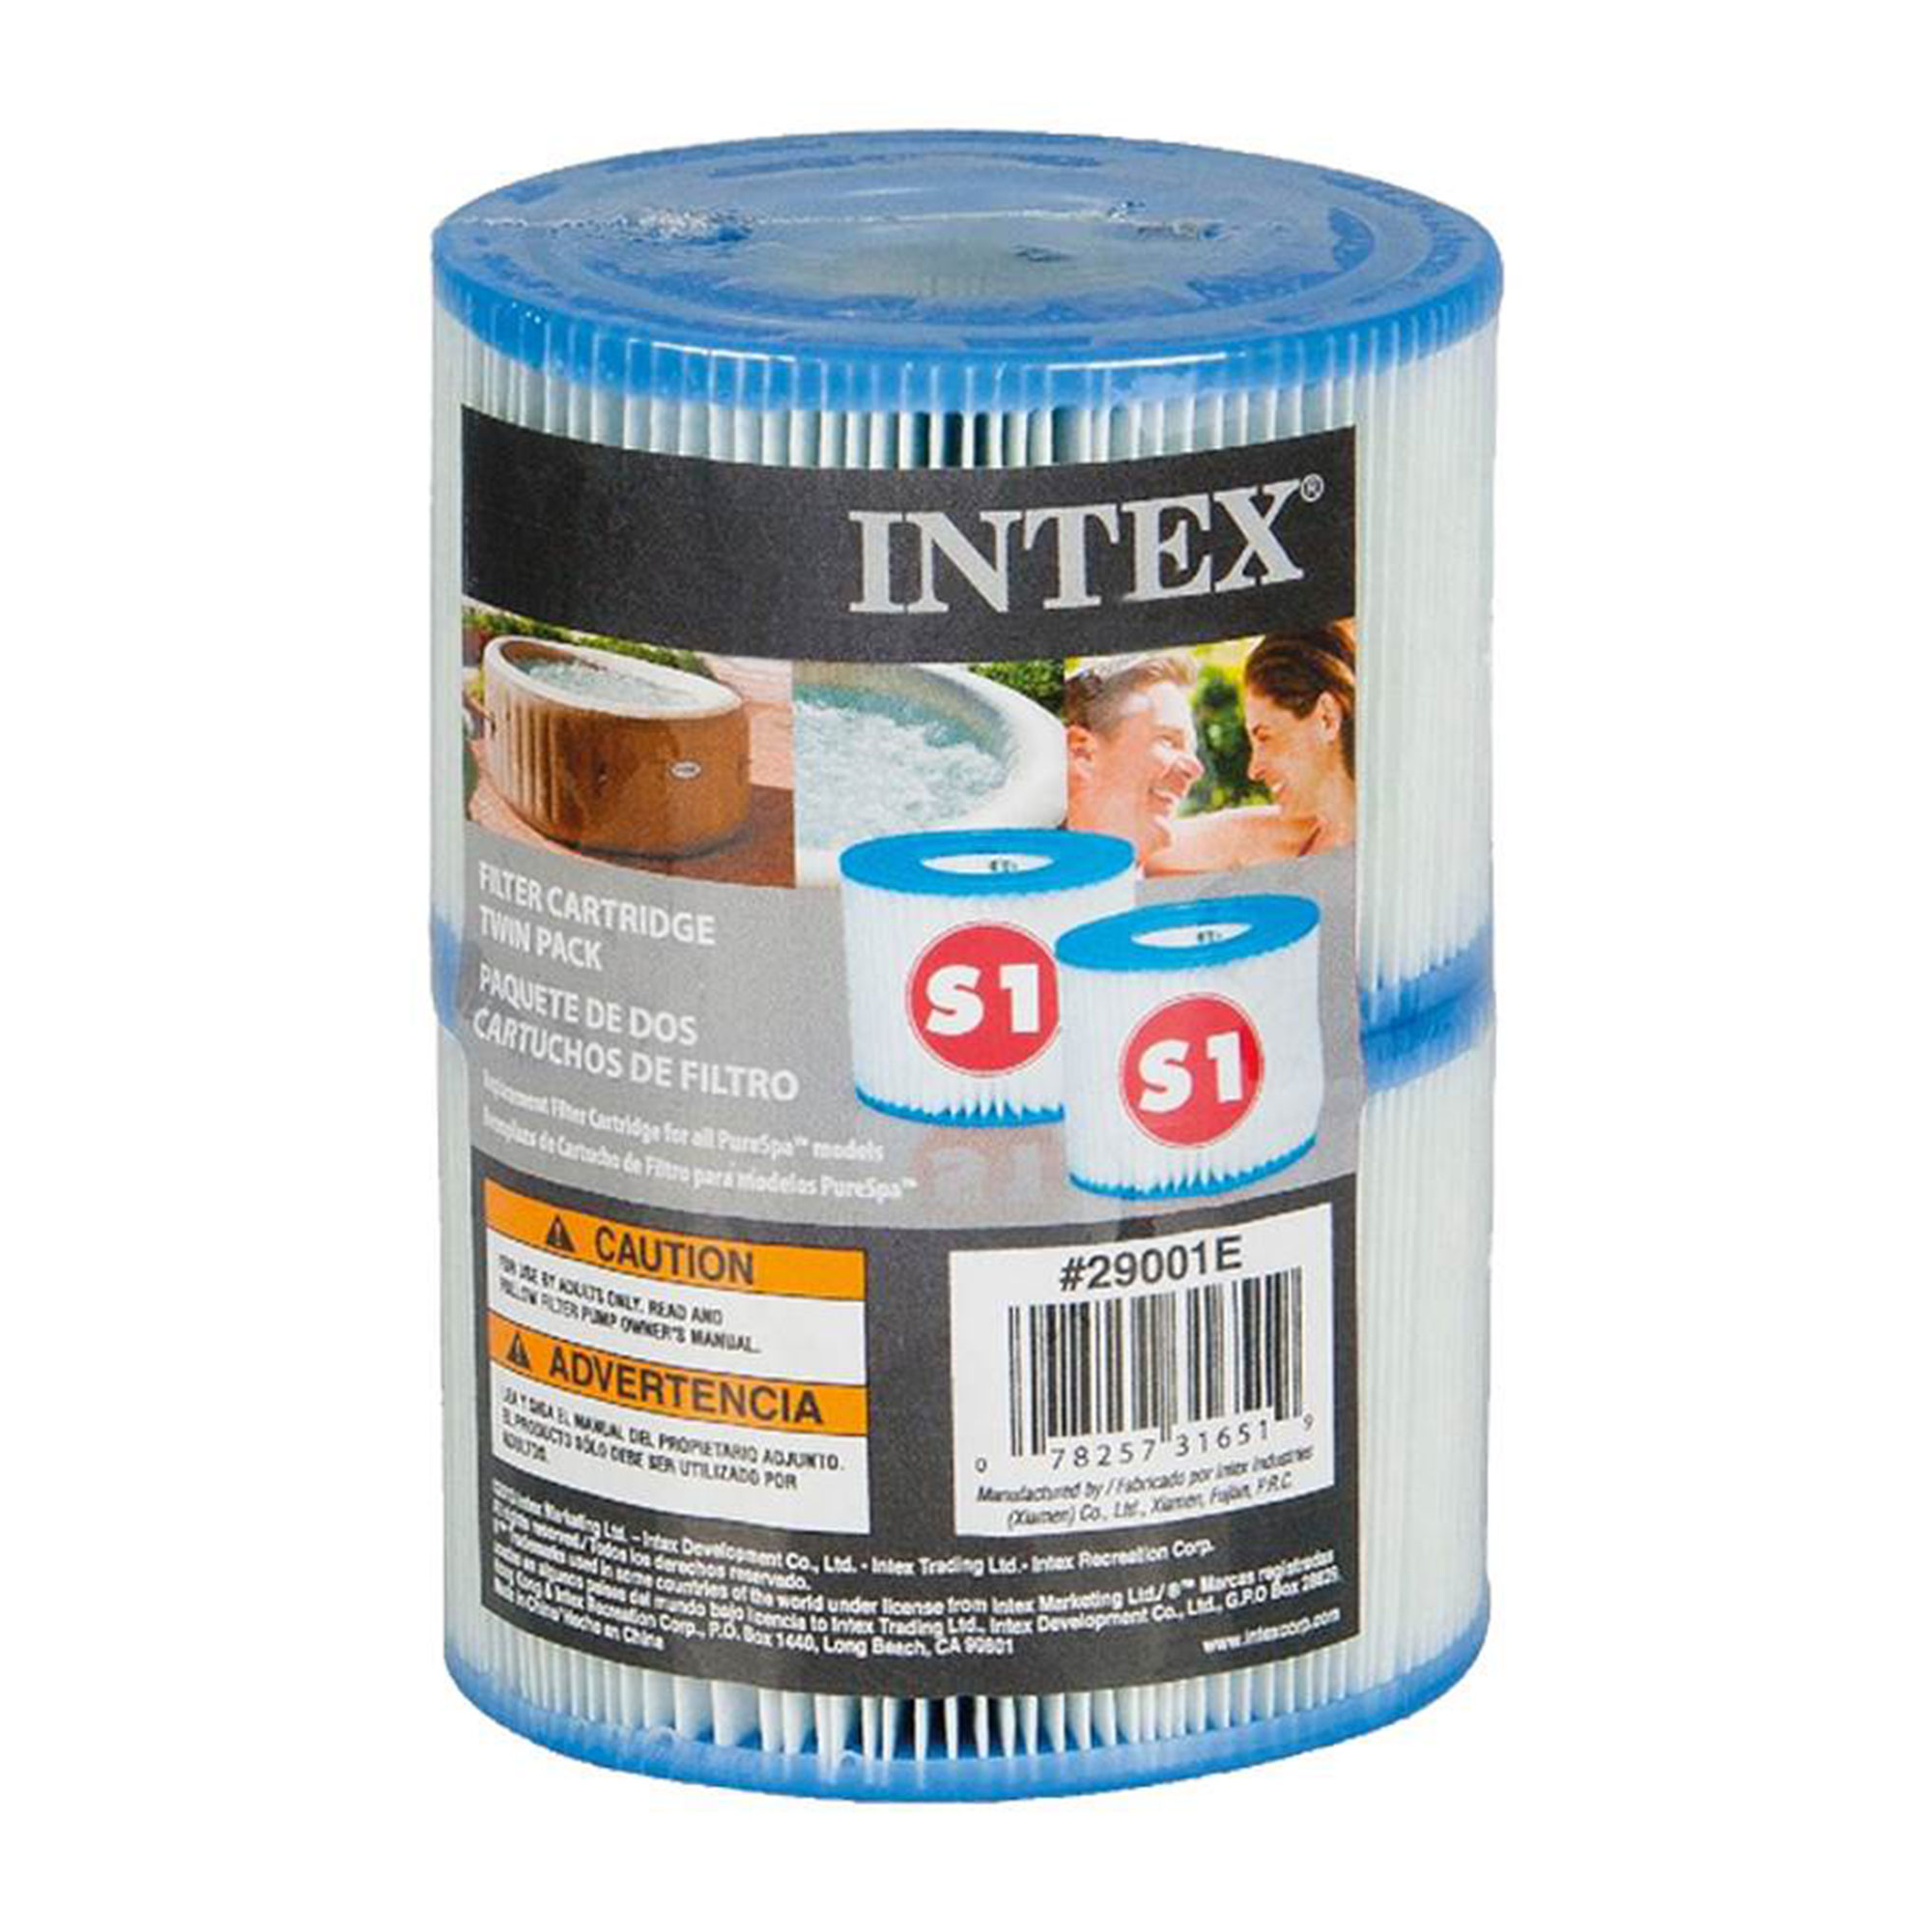 12-Pack Intex S1 Spa Filter Cartridges